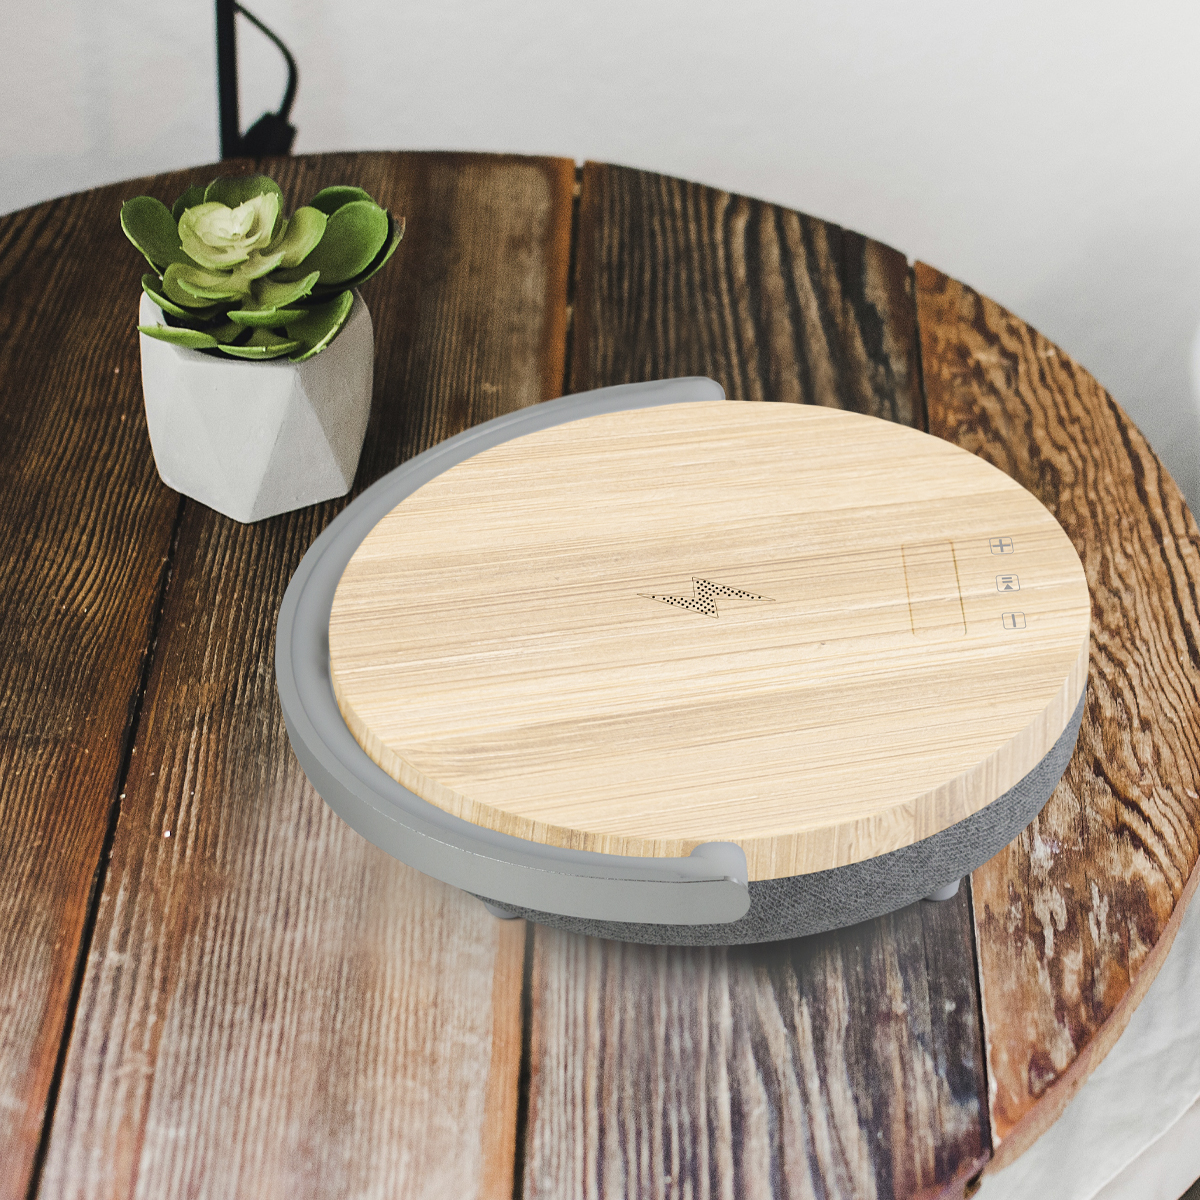 PRIXTON Speaker Light Holz Bluetooth-Lautsprecher, Wood